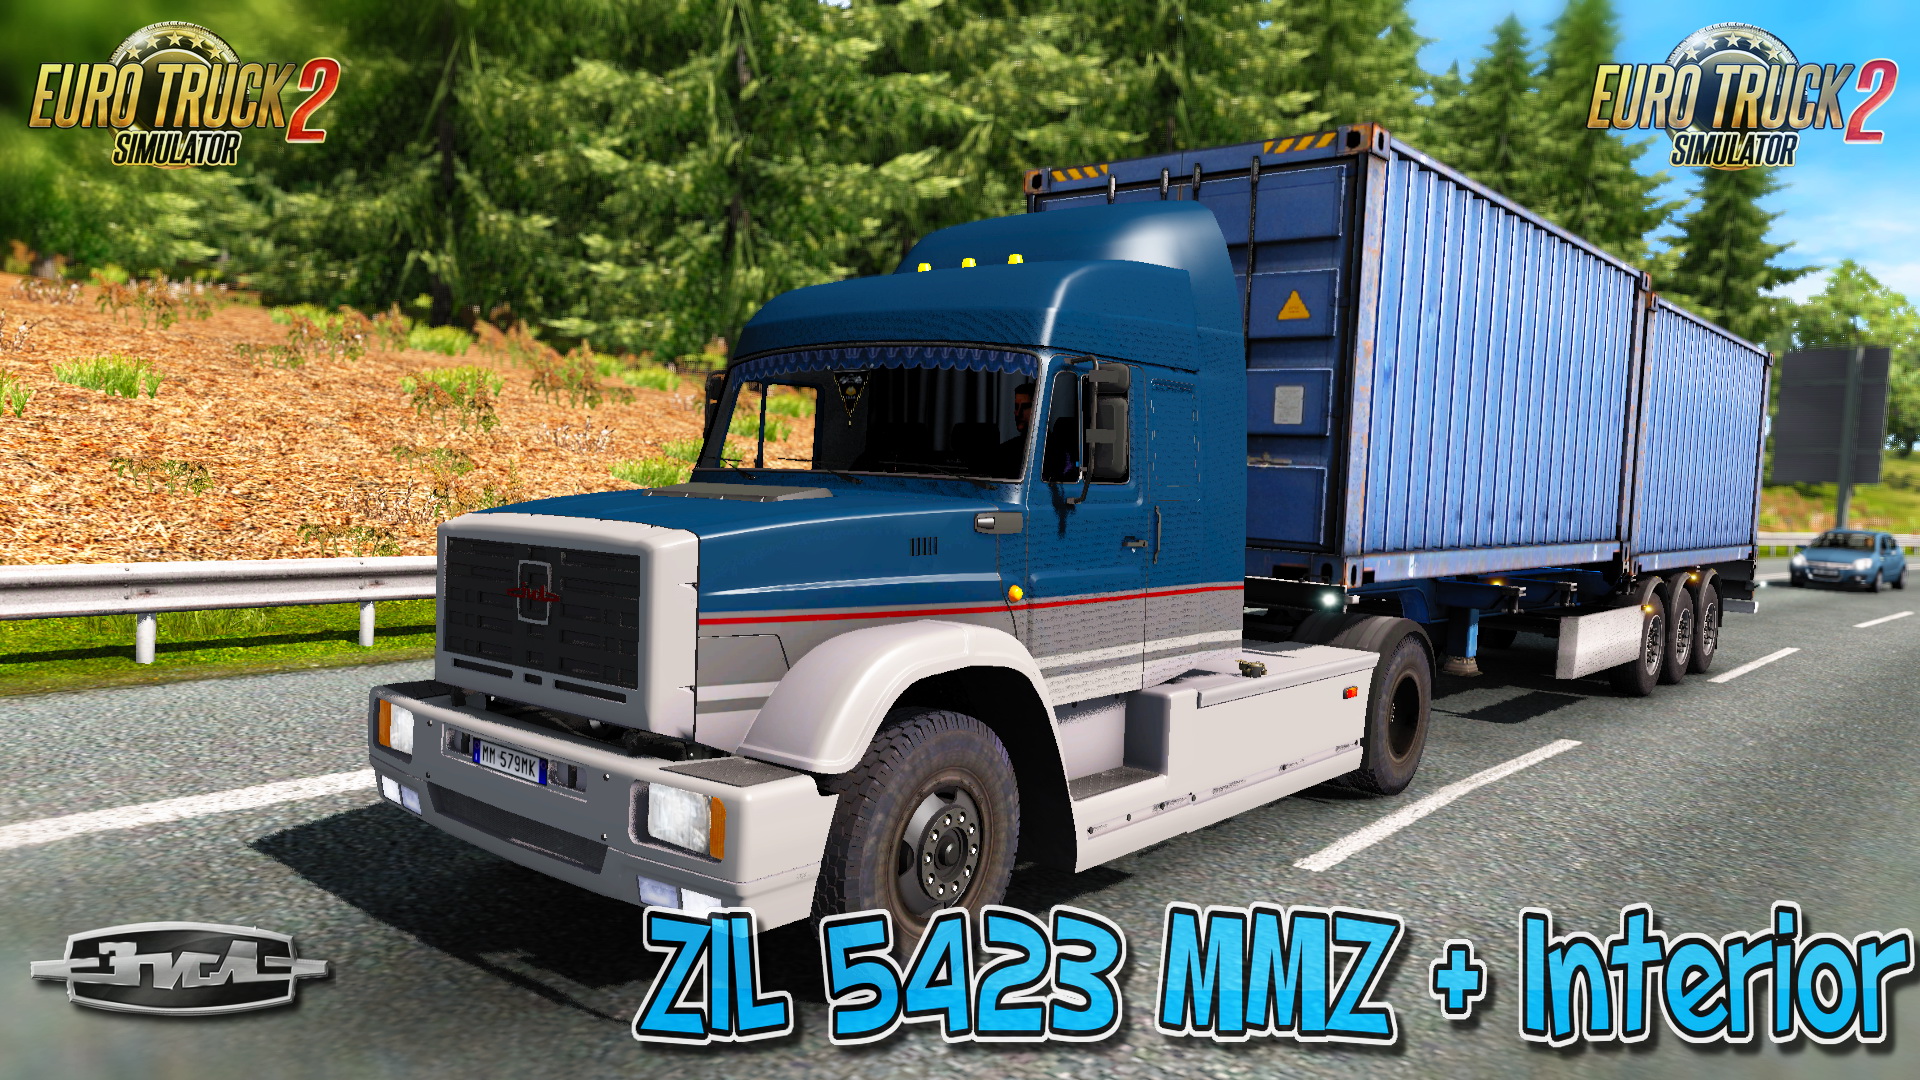 ZIL 5423 MMZ + Interior v2.6 (1.26.x) for ETS 2